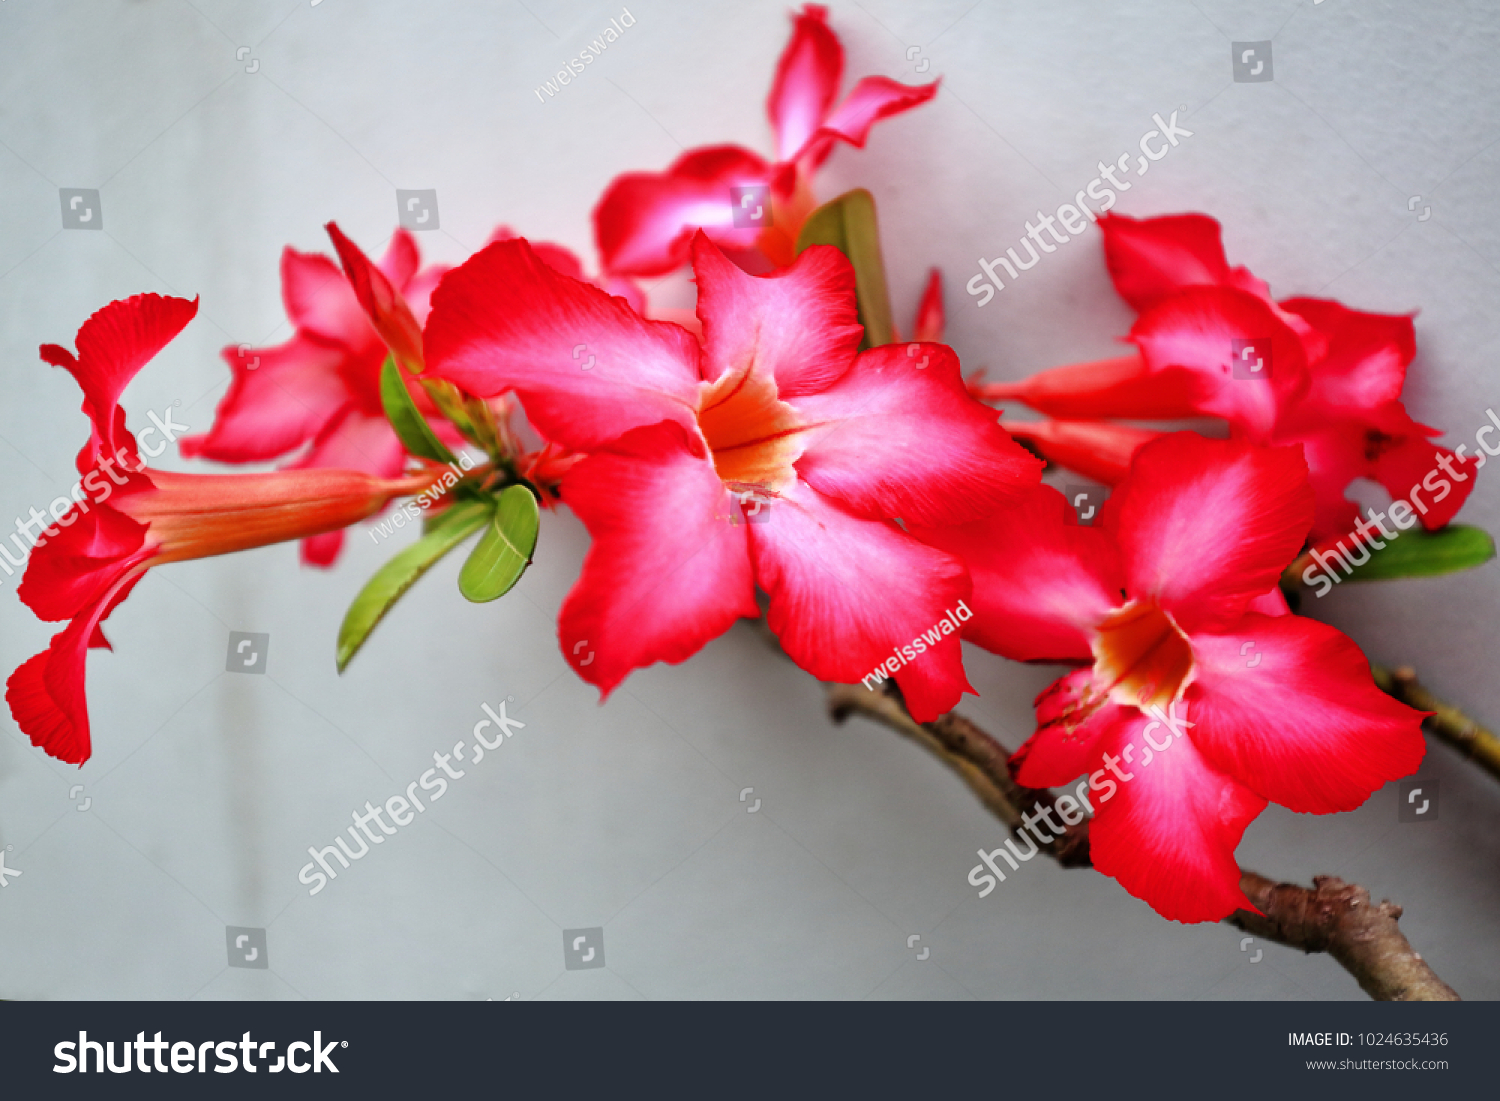 Redpinkish Desert Rose Flowers Blooming Garden Nature Stock Image